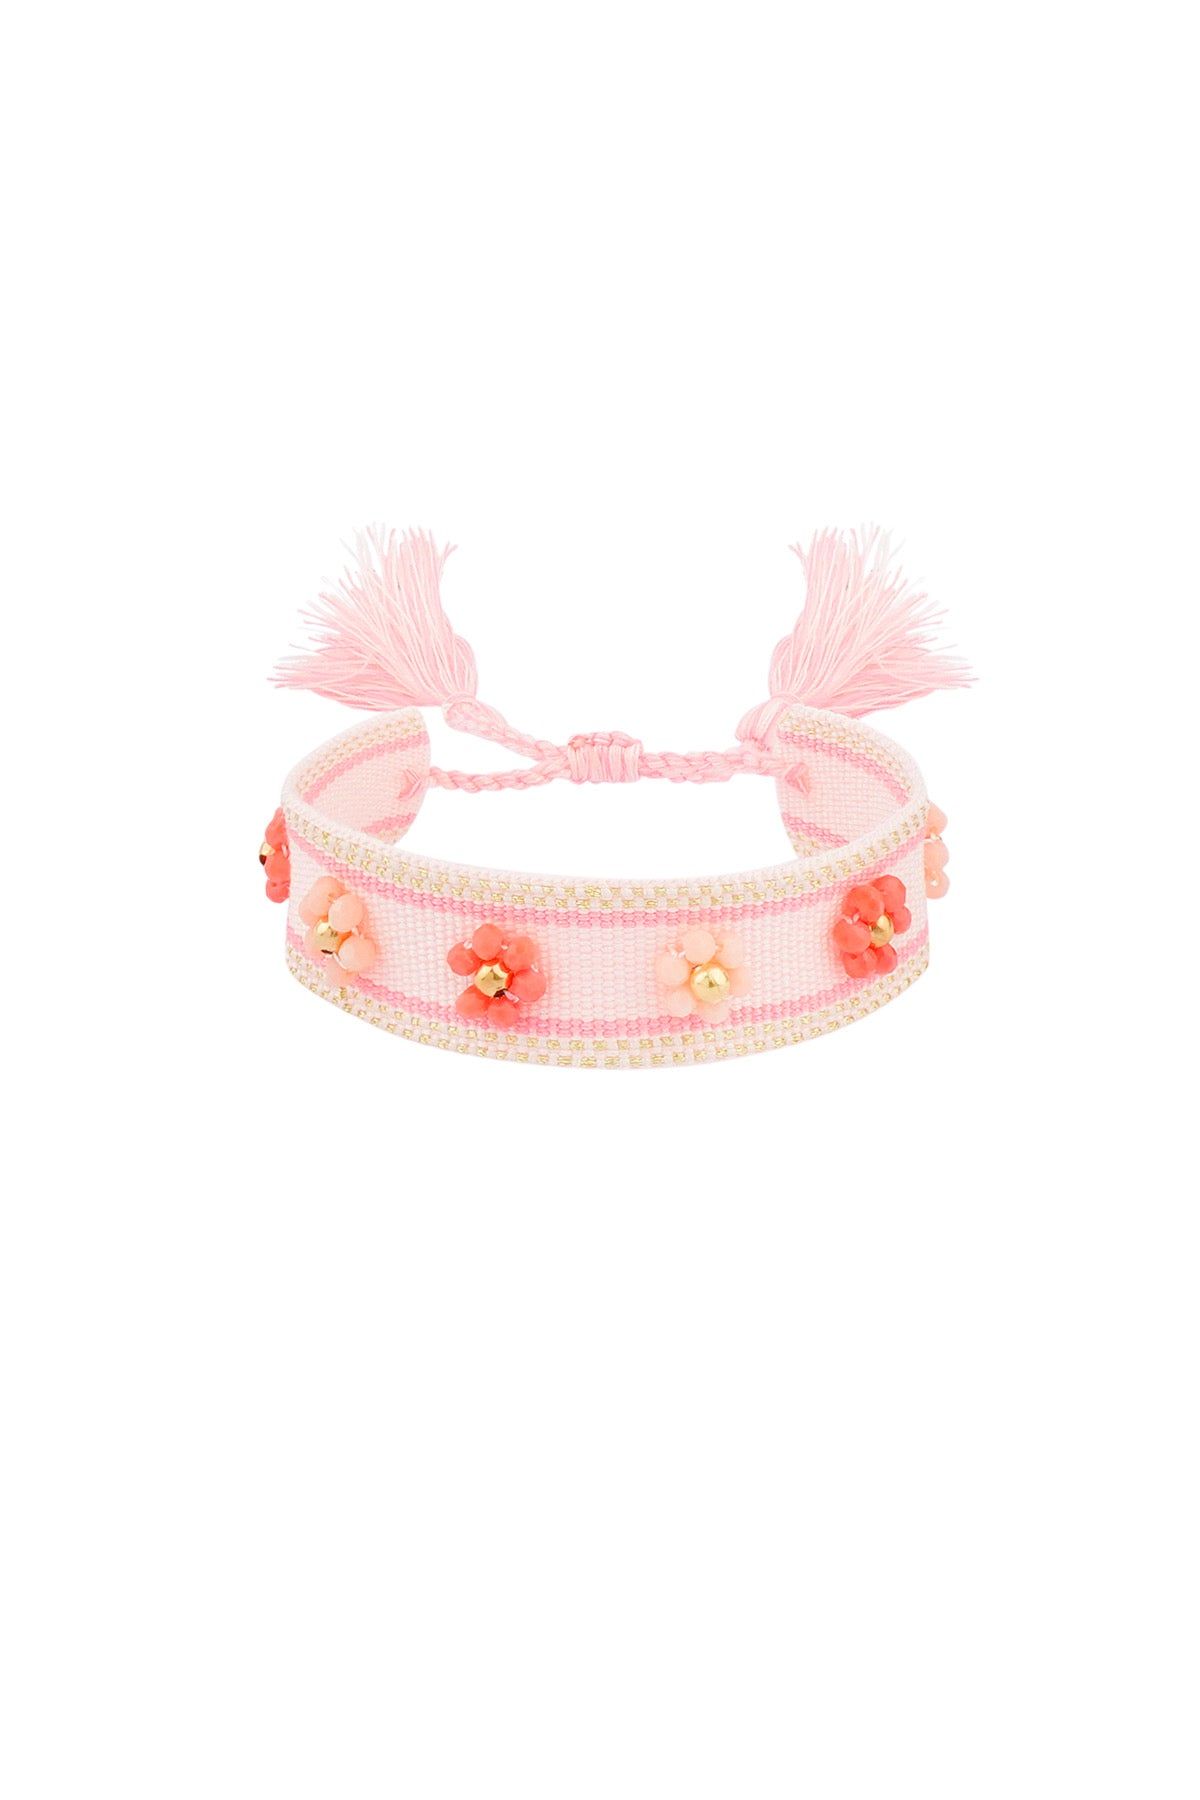 Statement Armband mit Perlenblumen -Rosa-/Pink-